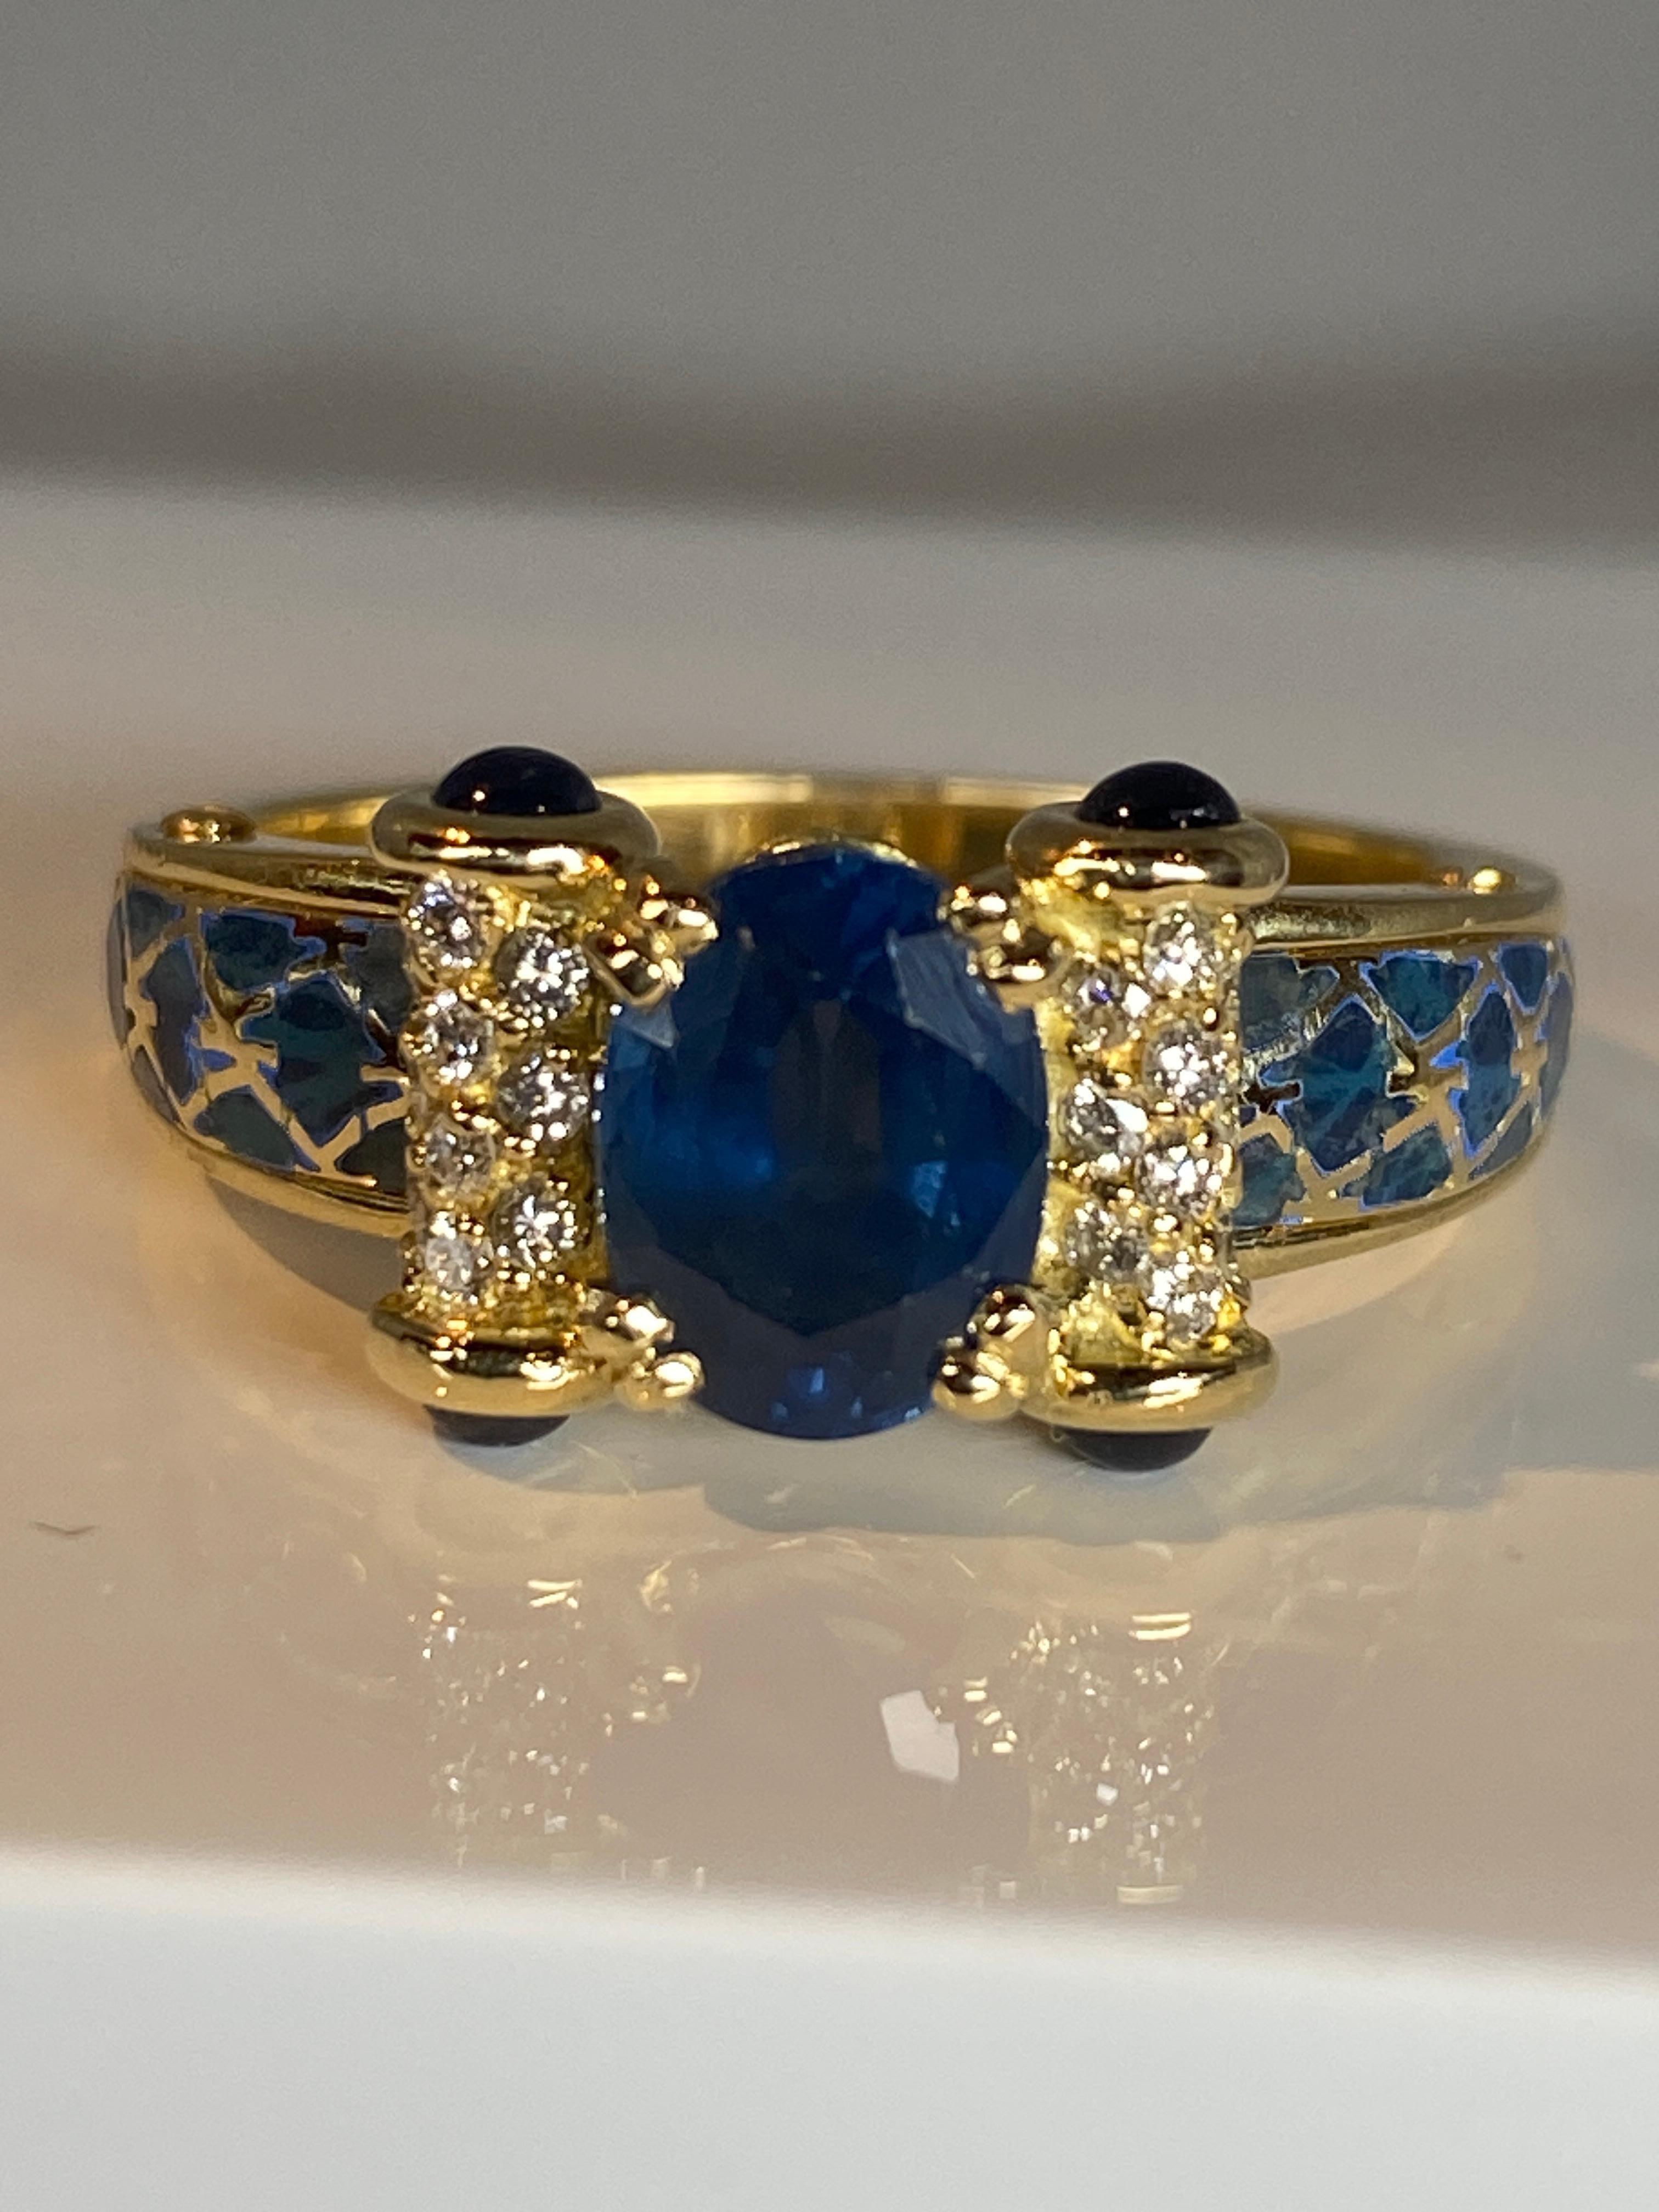 Korloff Ring in 18 Carat Gold: Sapphires, Diamonds, Blue Enamel For Sale 14